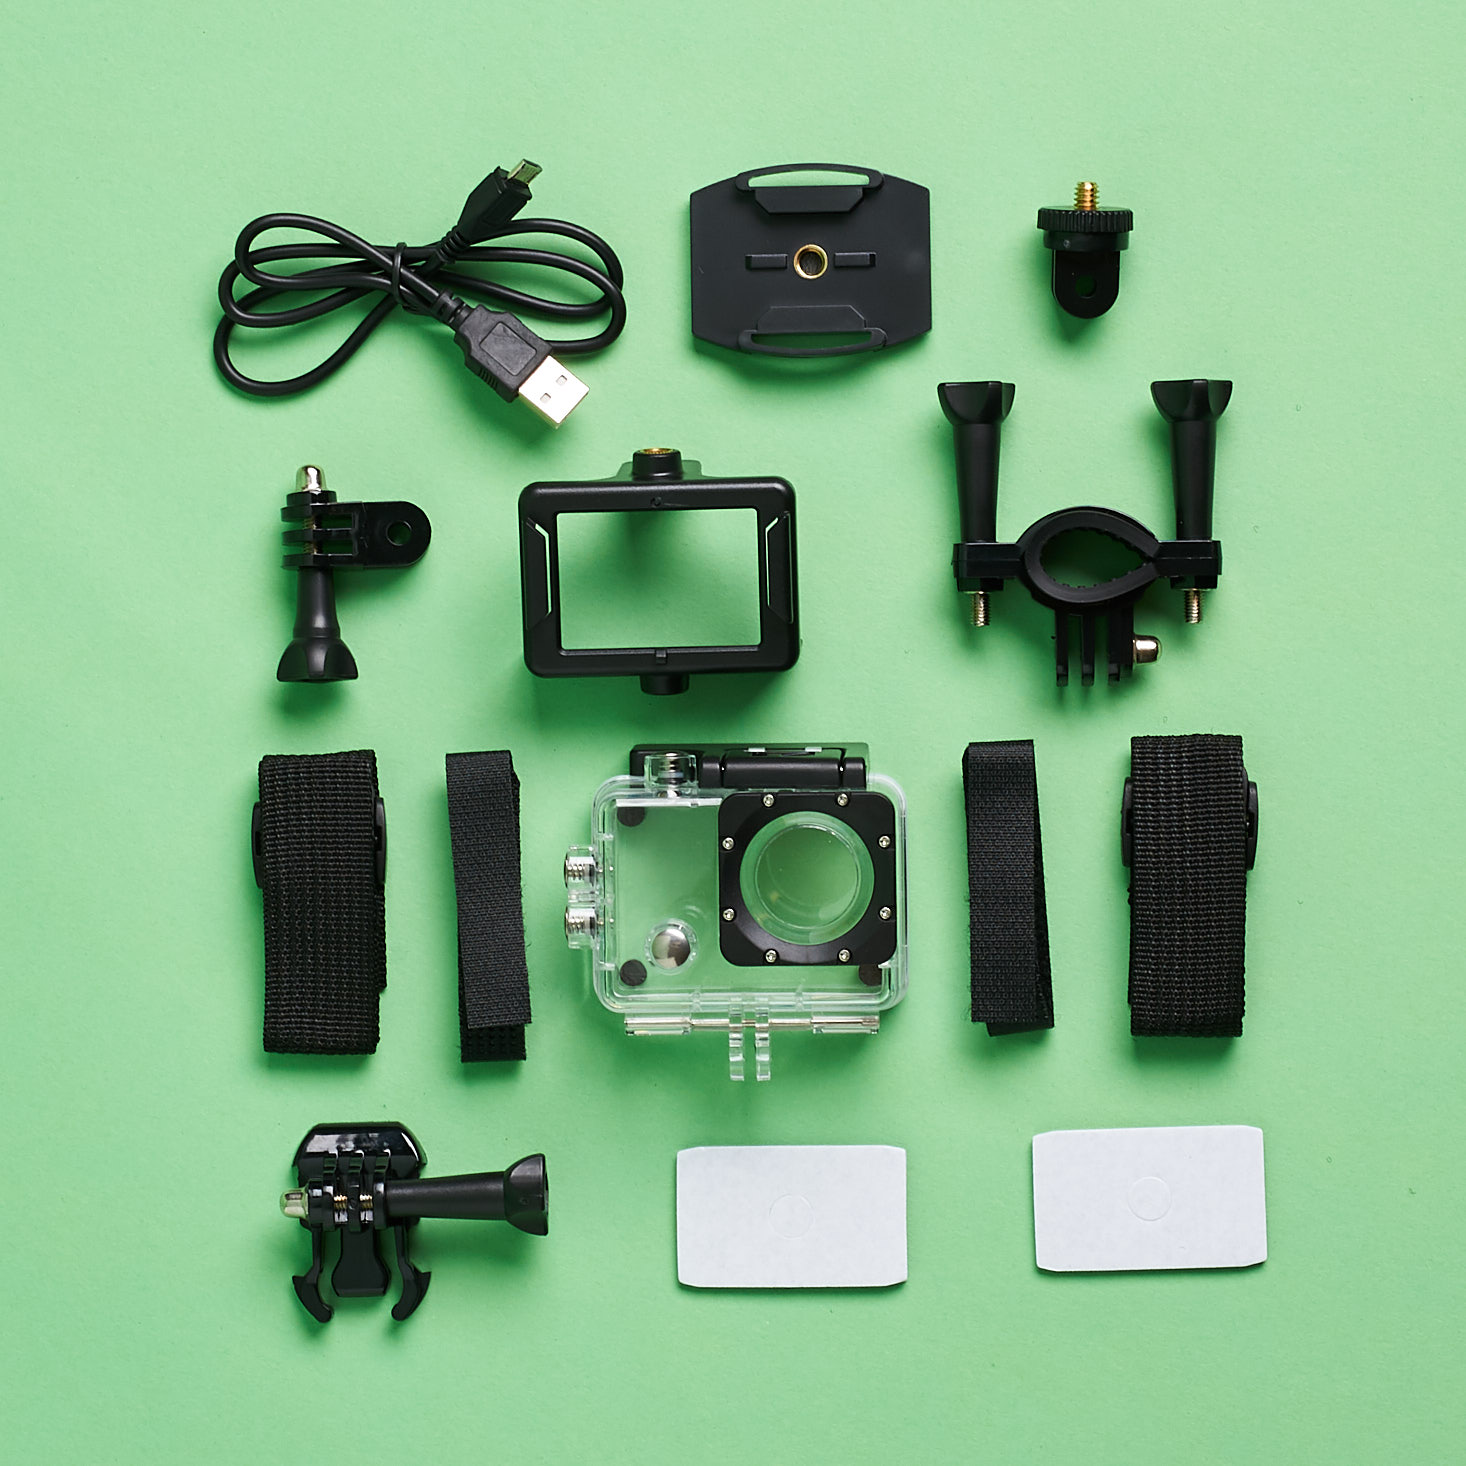 Accessories for Ekho DV8000 1080P Action Camera